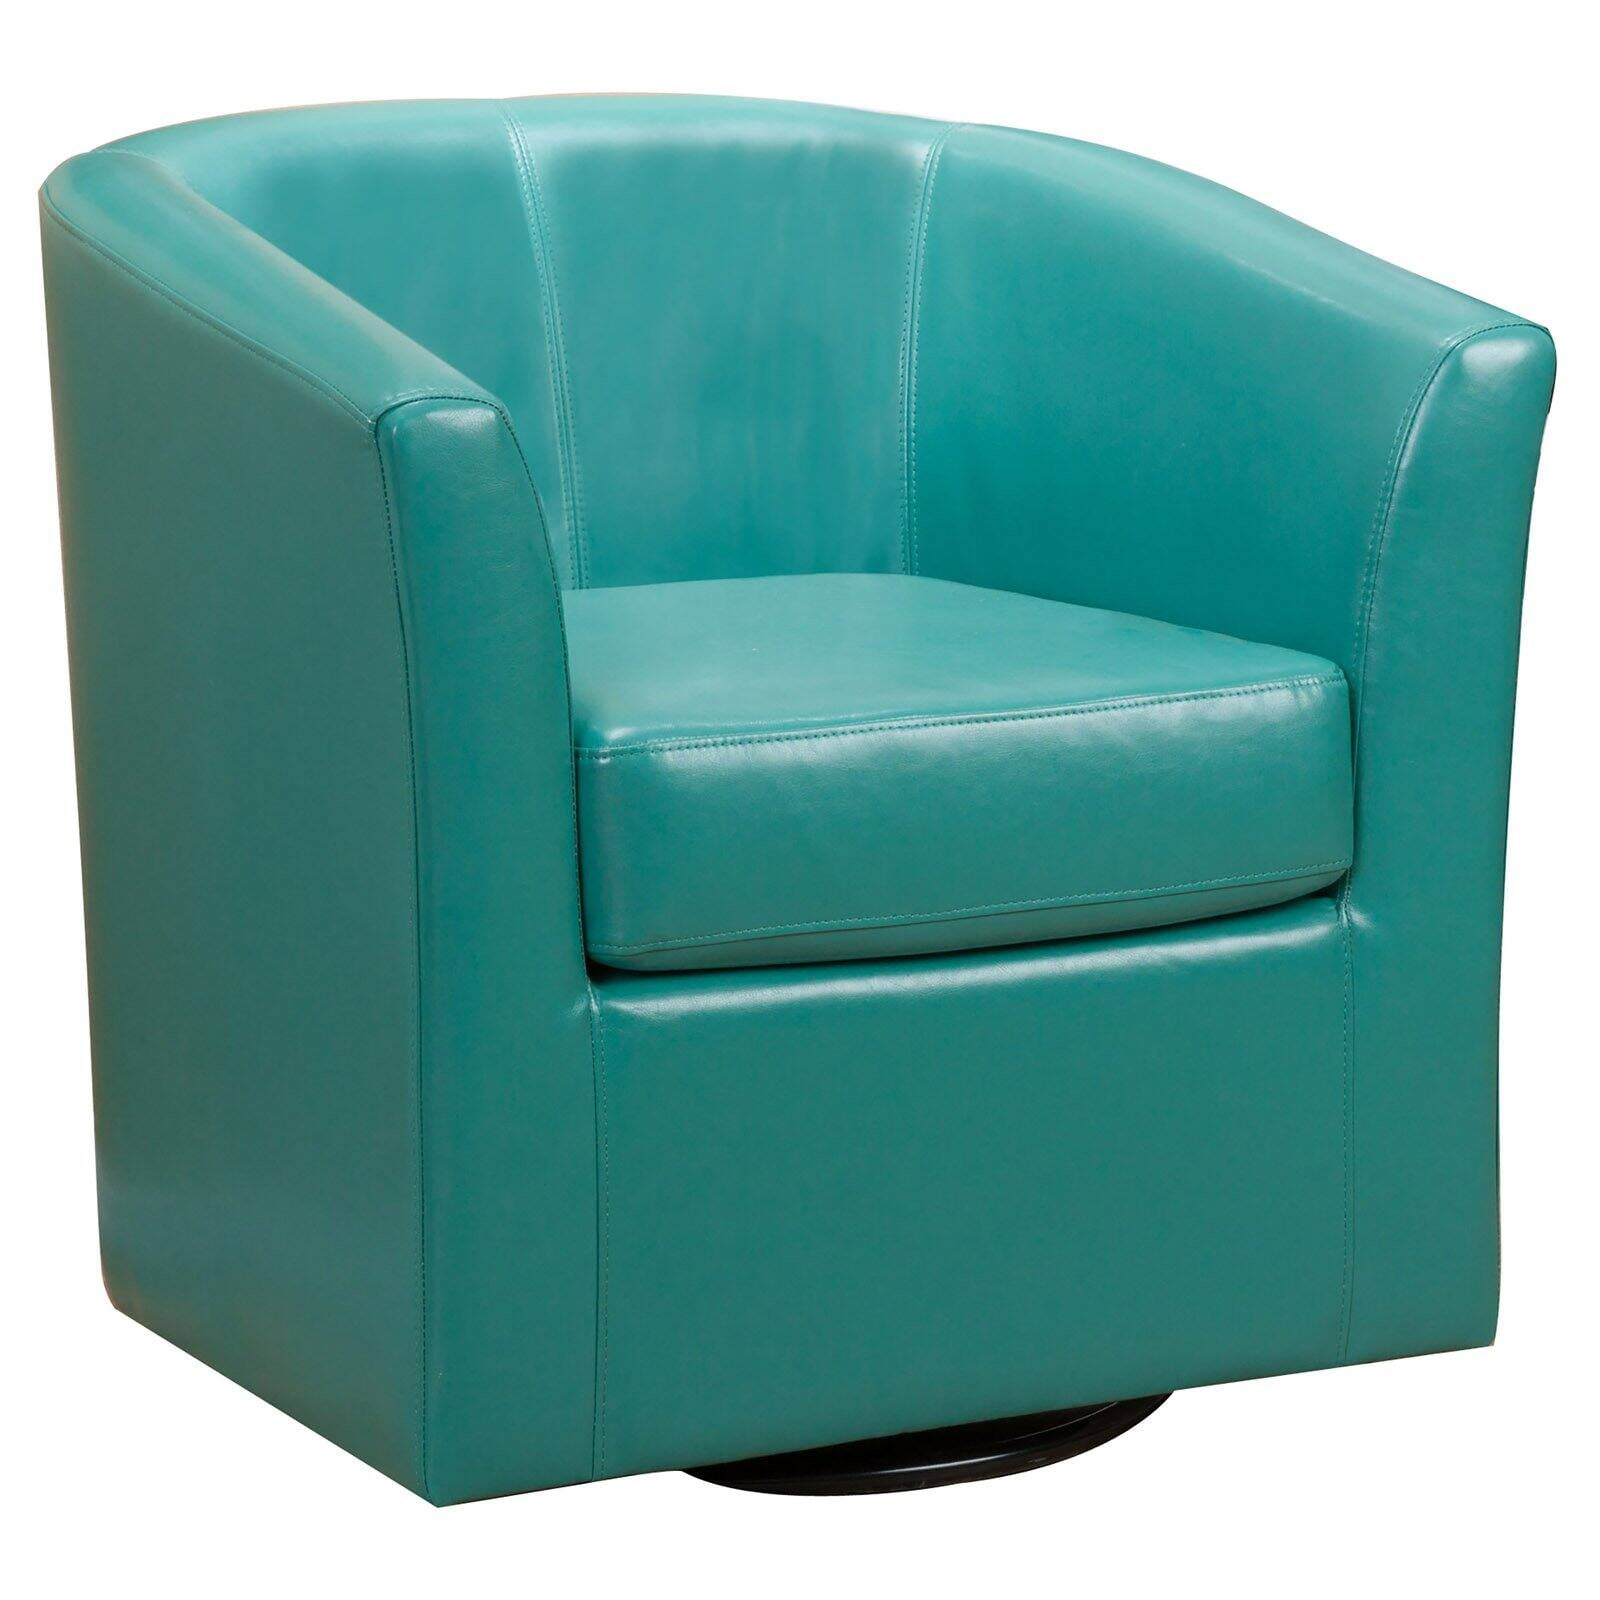 Swivel Barrel Chair Com, Leather Swivel Tub Chair